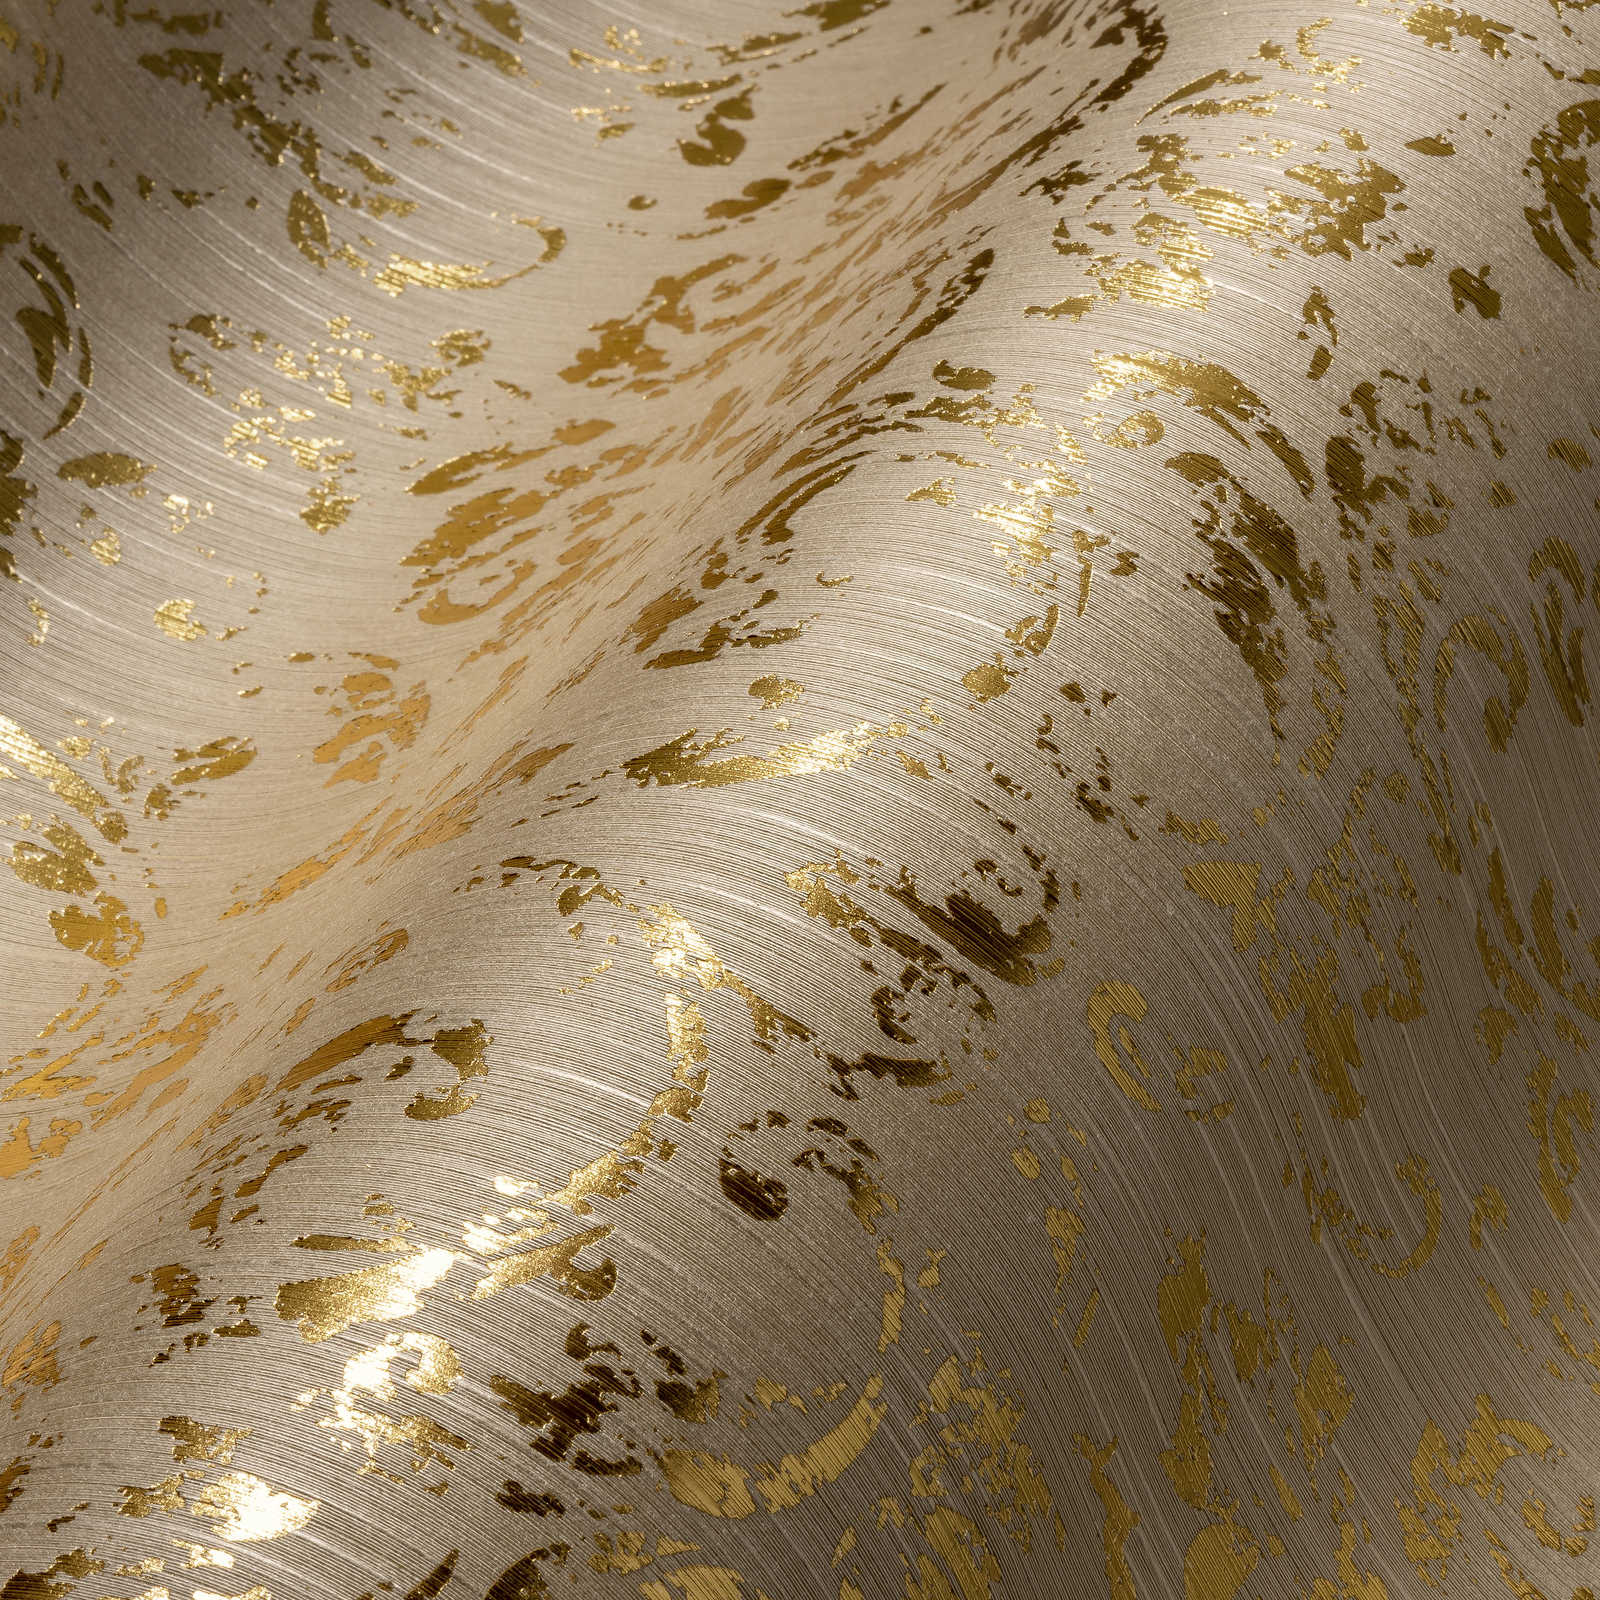             Ornamenttapete im Used-Look mit Metallic-Effekt – Beige, Gold
        